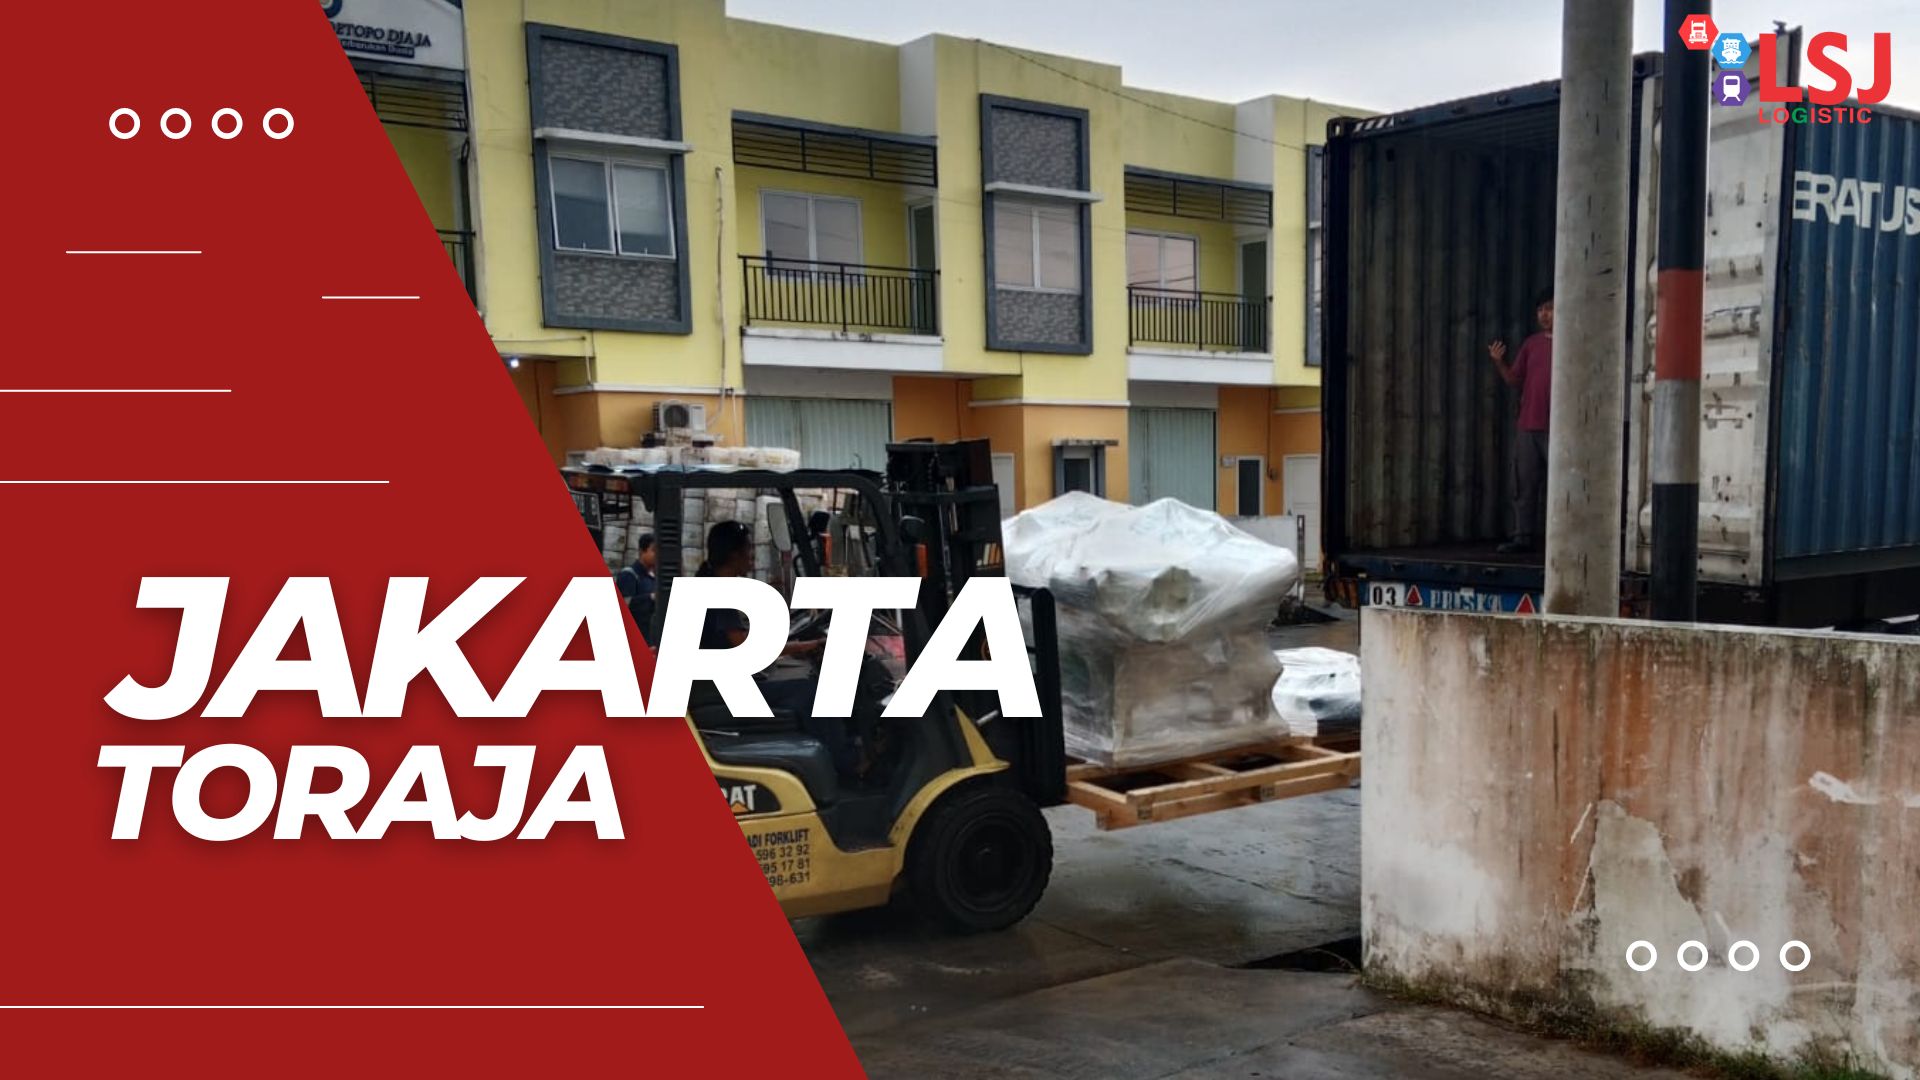 Ekspedisi Container Jakarta Toraja